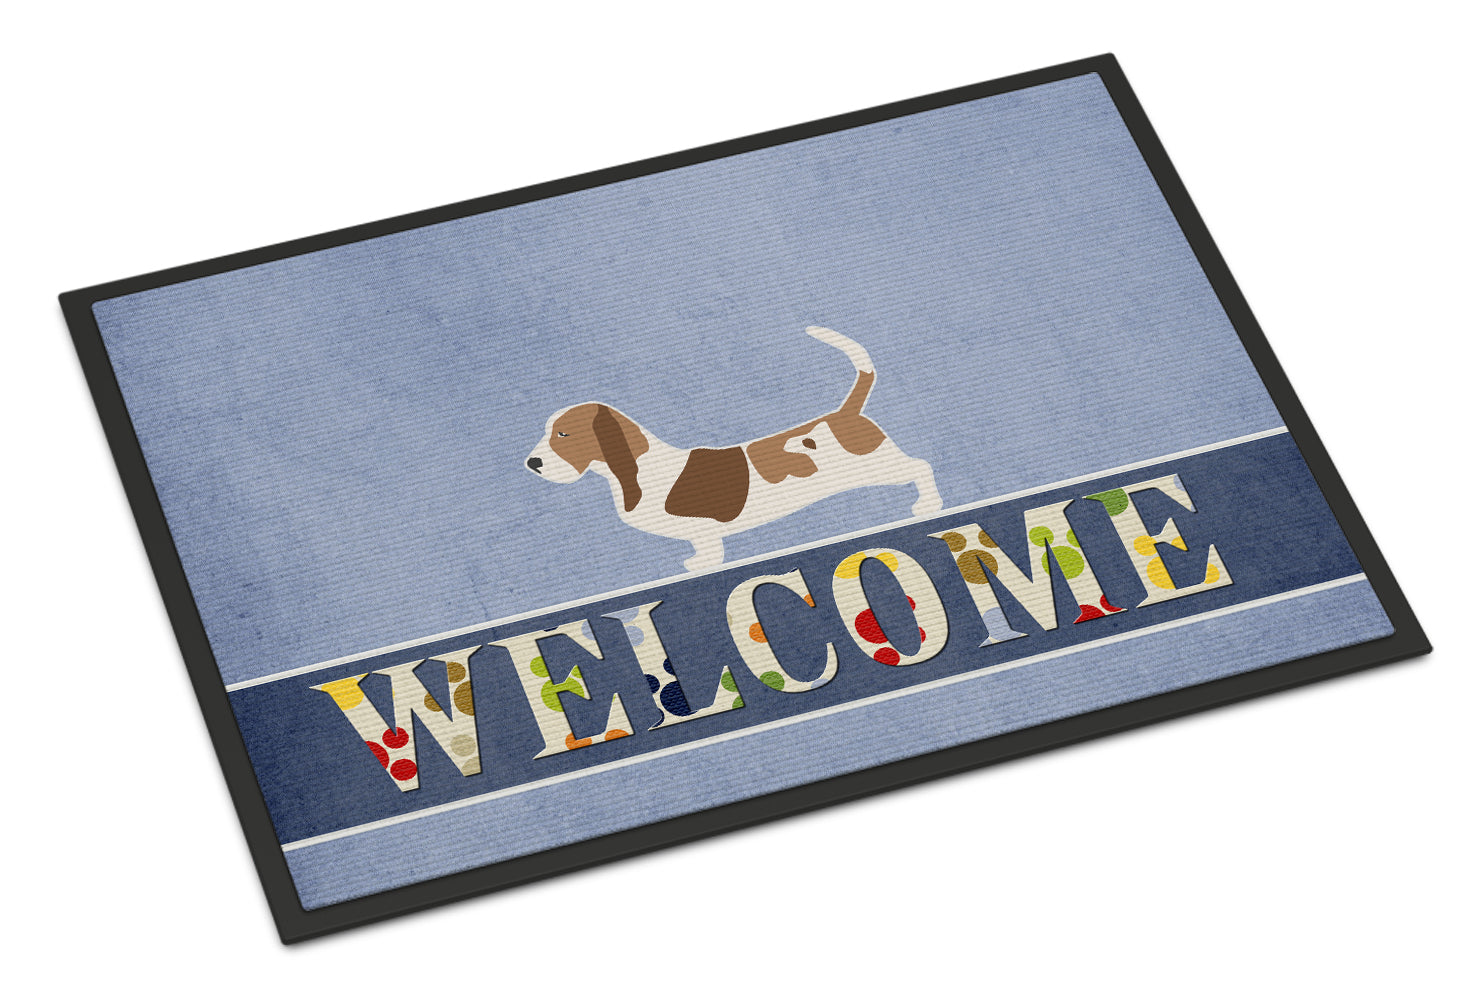 Basset Hound Welcome Indoor or Outdoor Mat 18x27 BB5506MAT - the-store.com